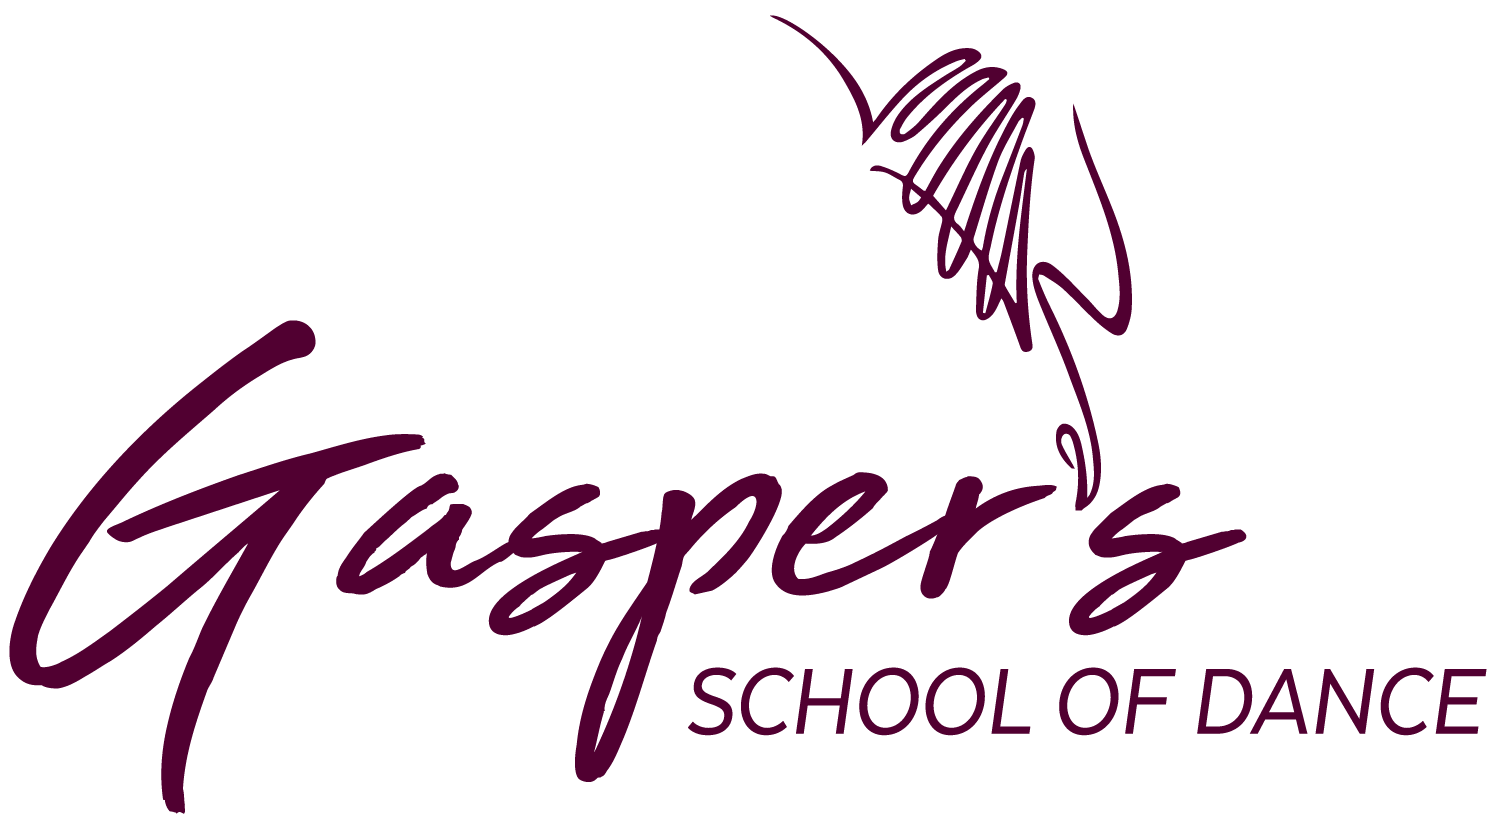 Gasper's School of Dance / Camp Gasper